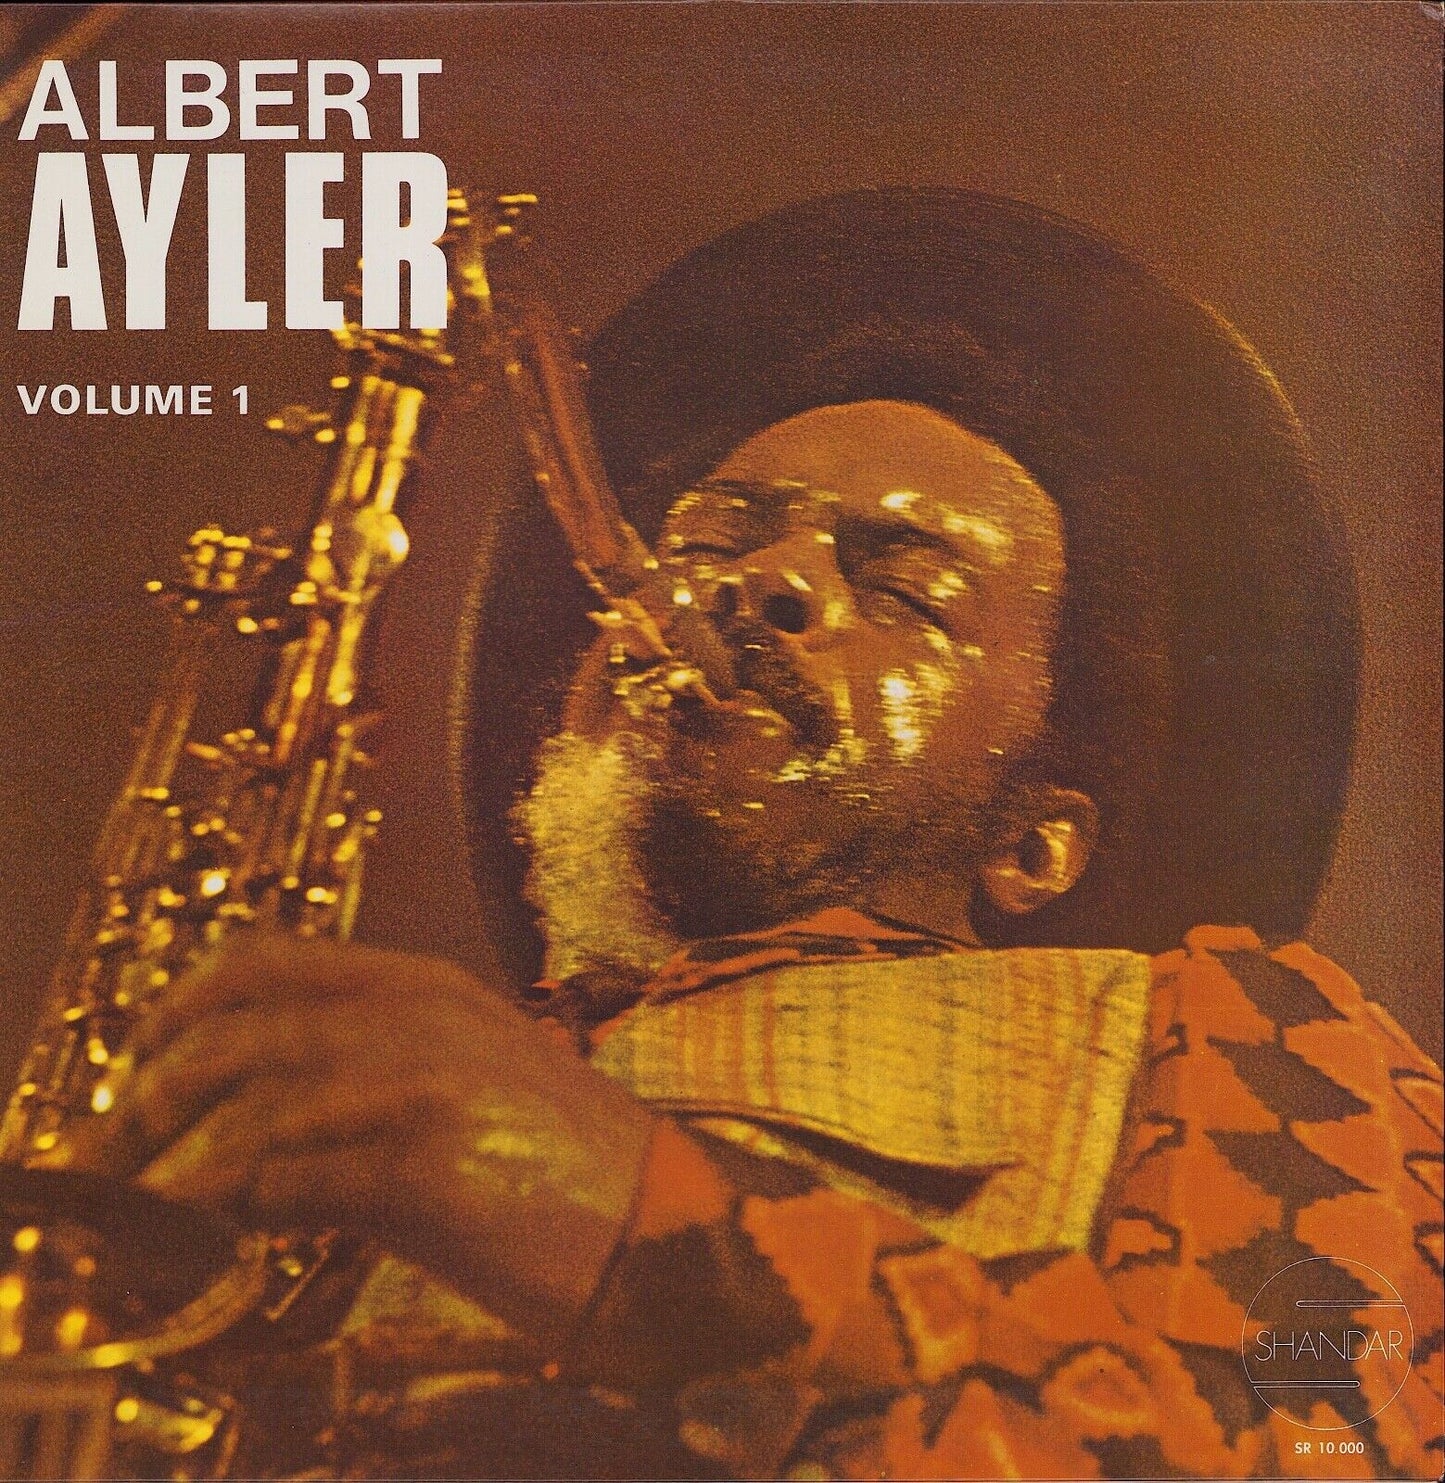 Albert Ayler ‎- Nuits De La Fondation Maeght Volume 1 Vinyl LP